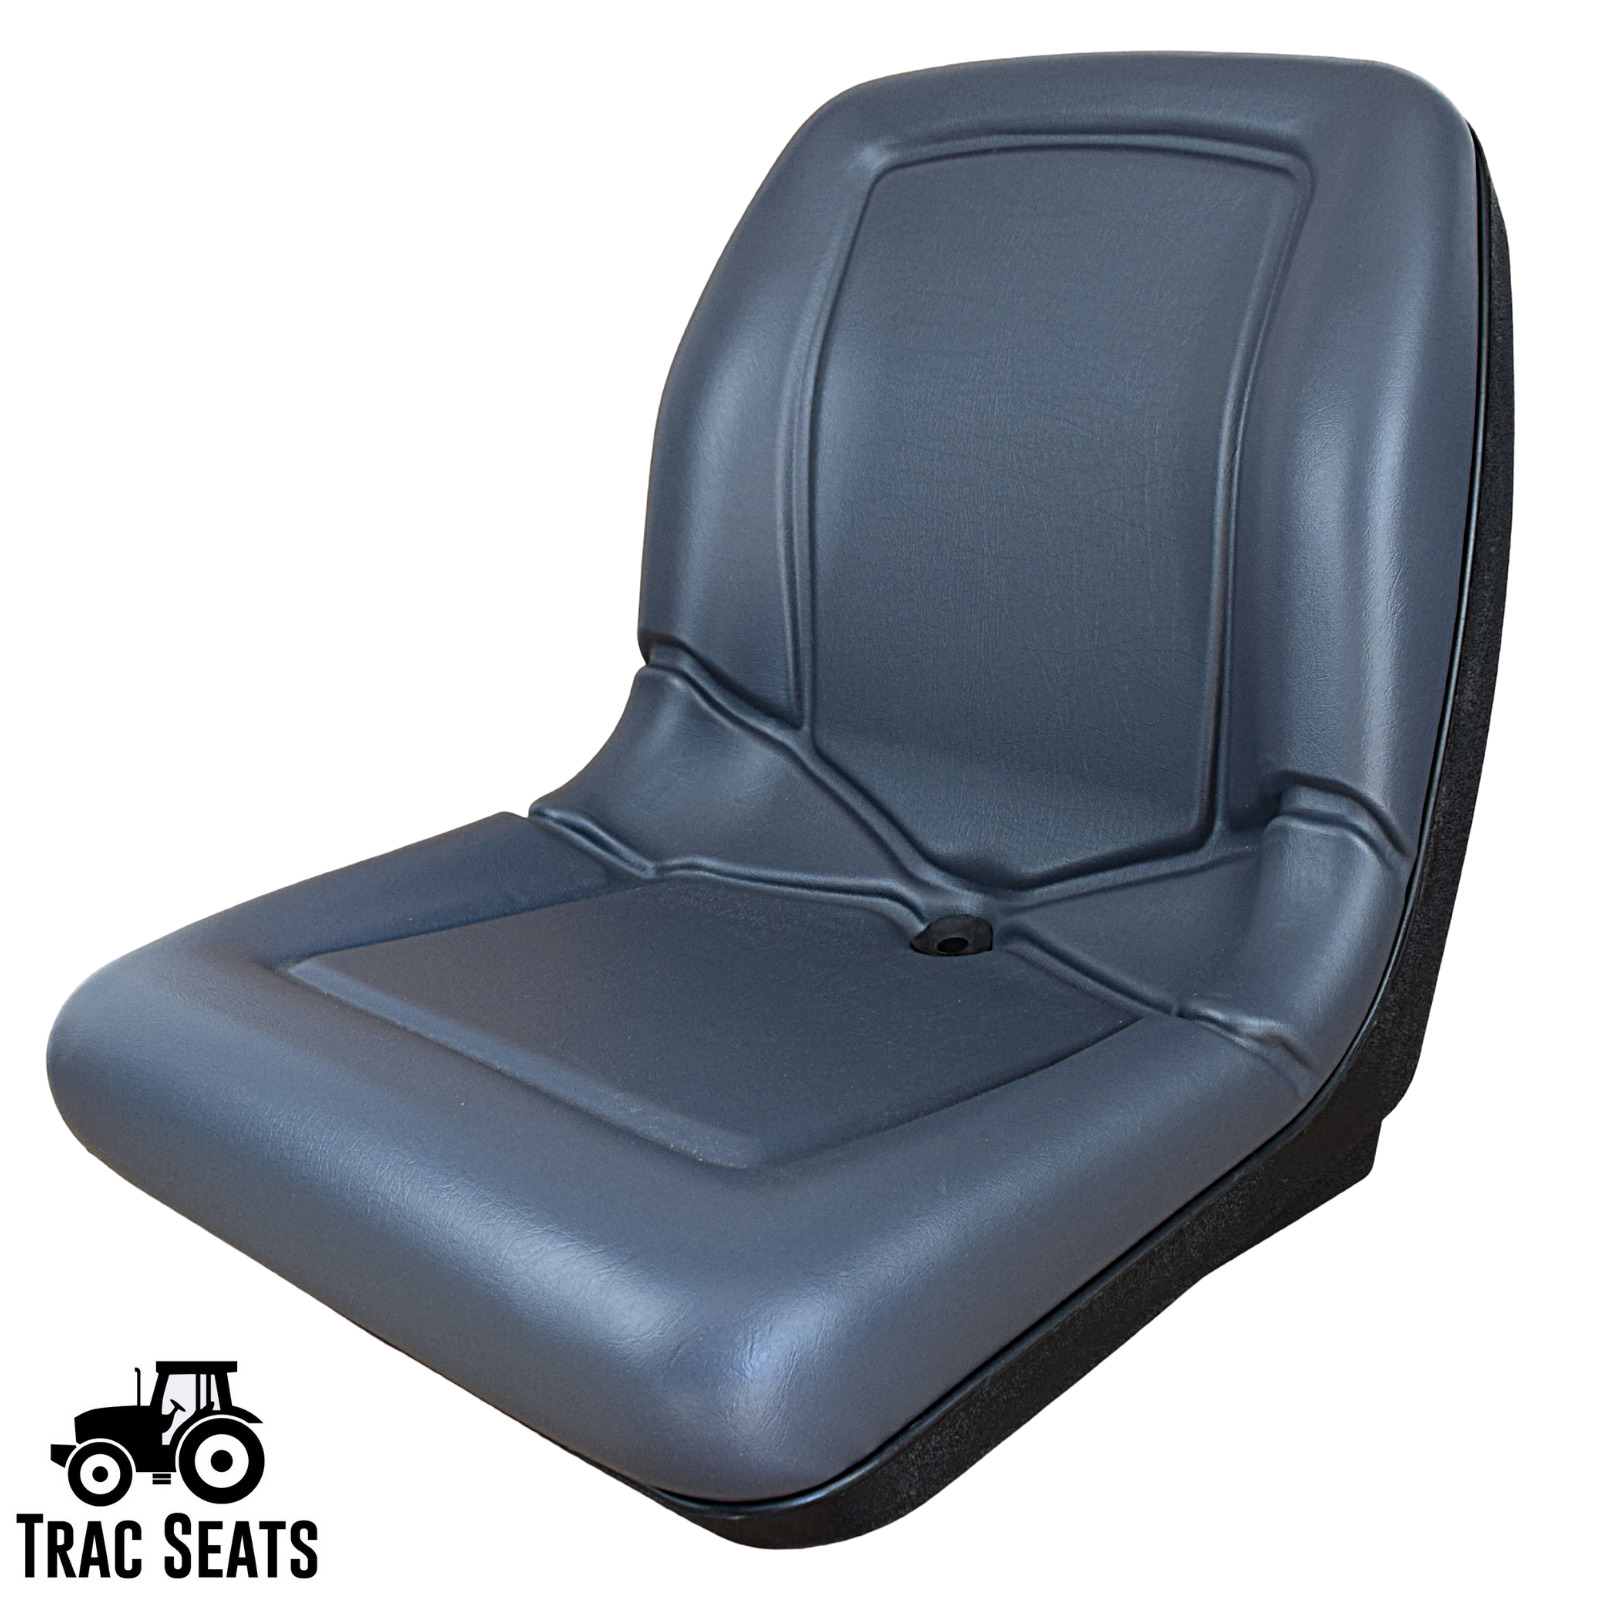 Seat for Kubota Lawn Mower F2880, F3560, GF1800, GR2110, TG1860 